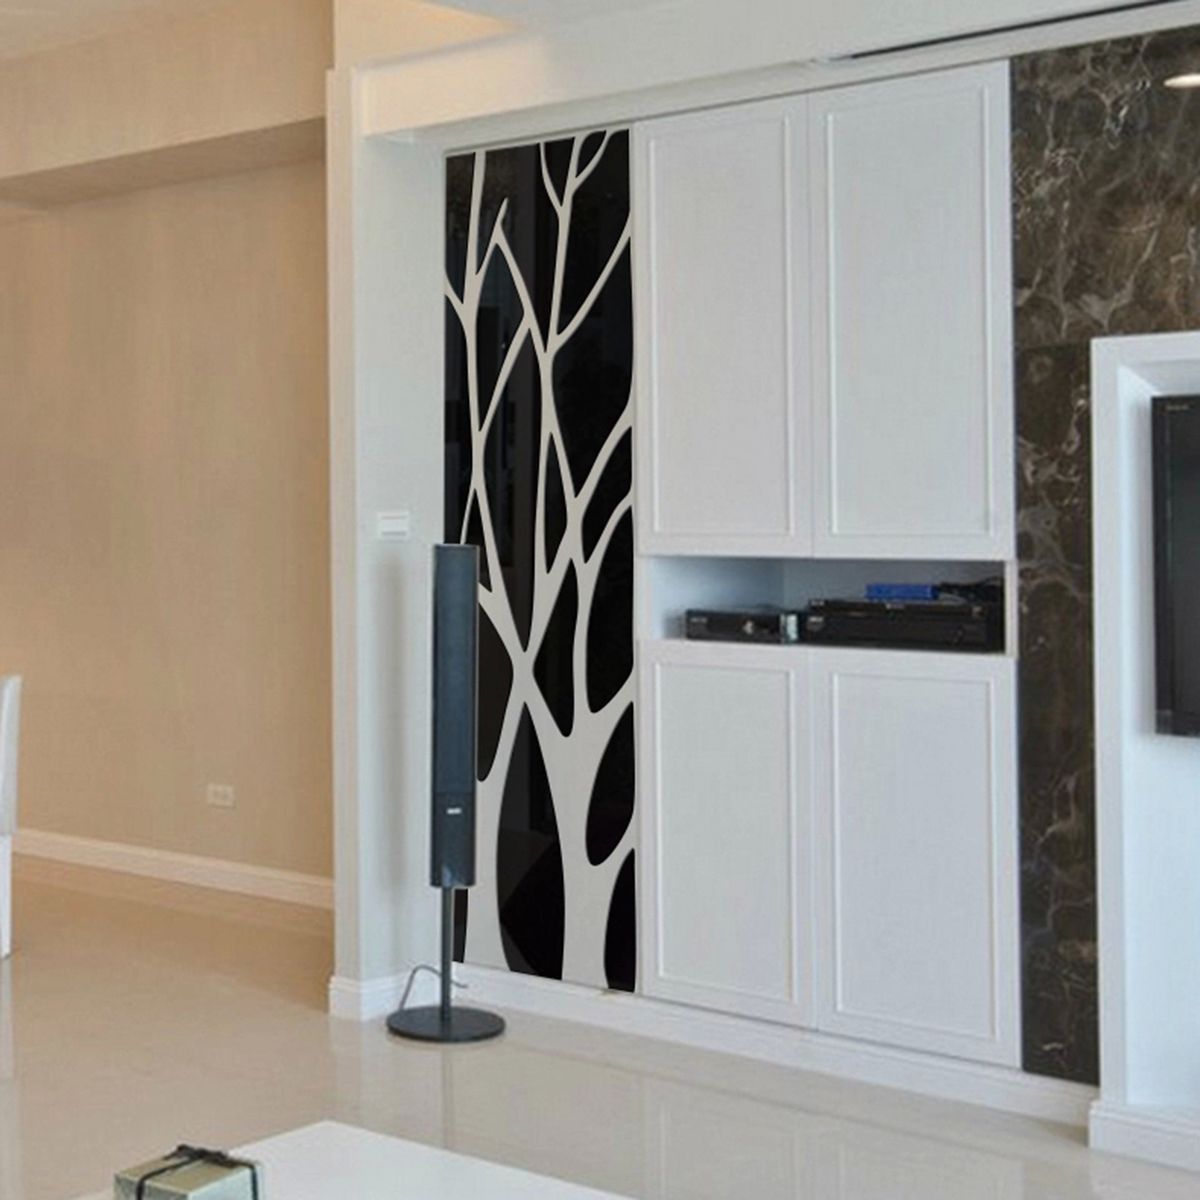 135-x-37cm-Mirror-Effect-Wall-Sticker-DIY-Tree-for-Kitchen-Living-Room-Decor-1623886